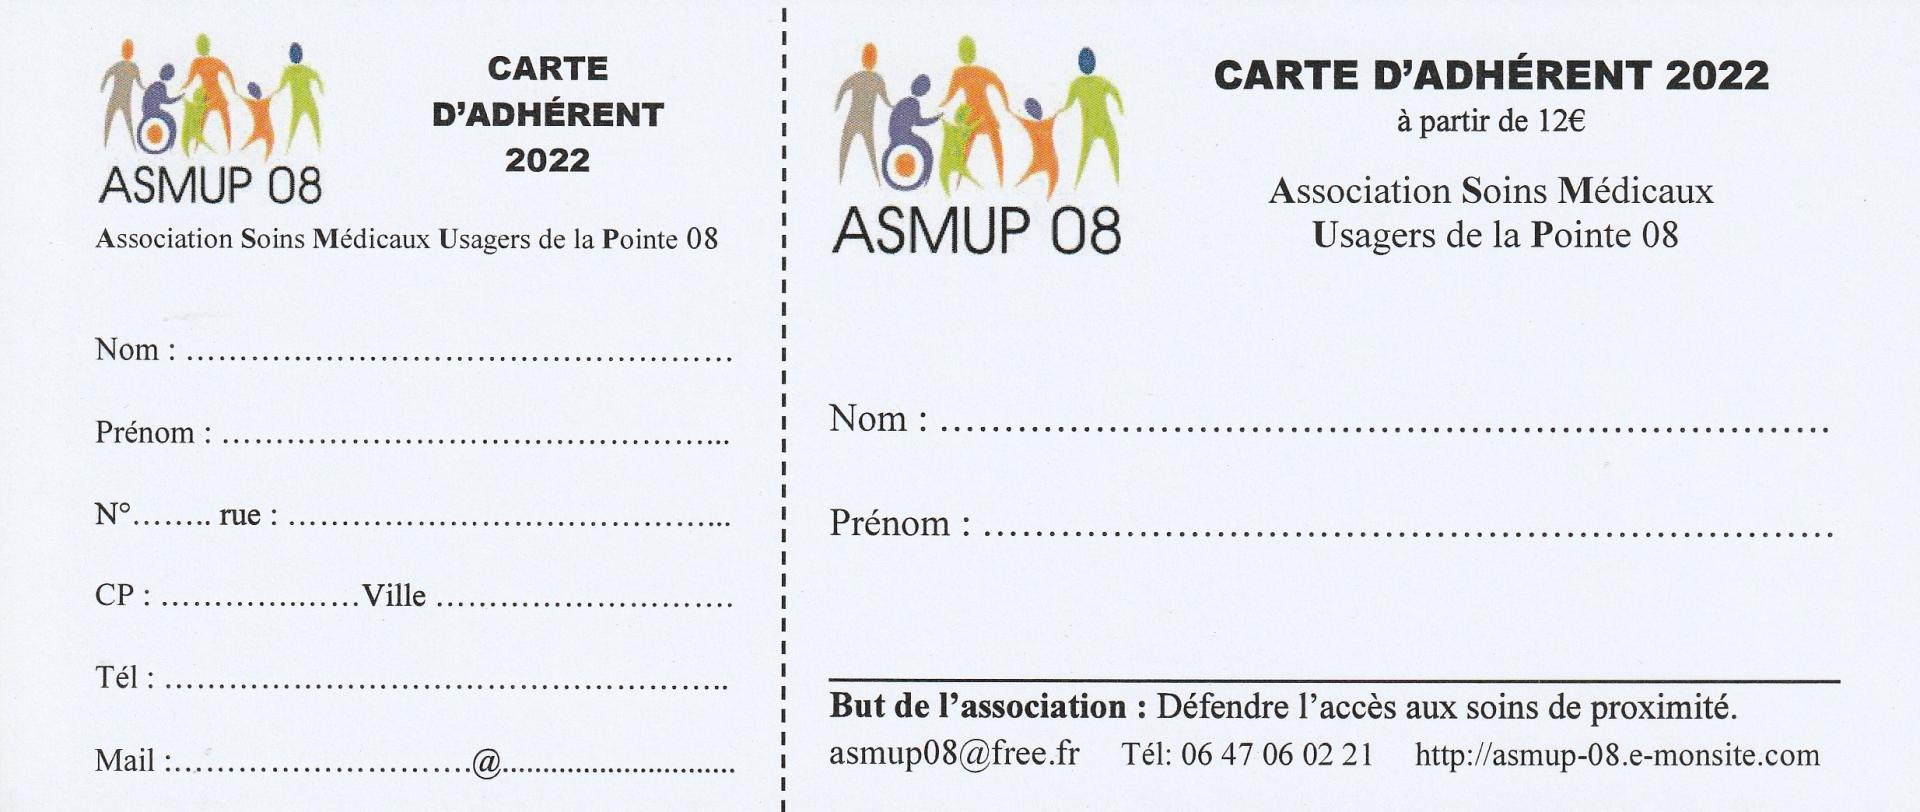 Carte adhesion asmup 2022 img 20220325 0001